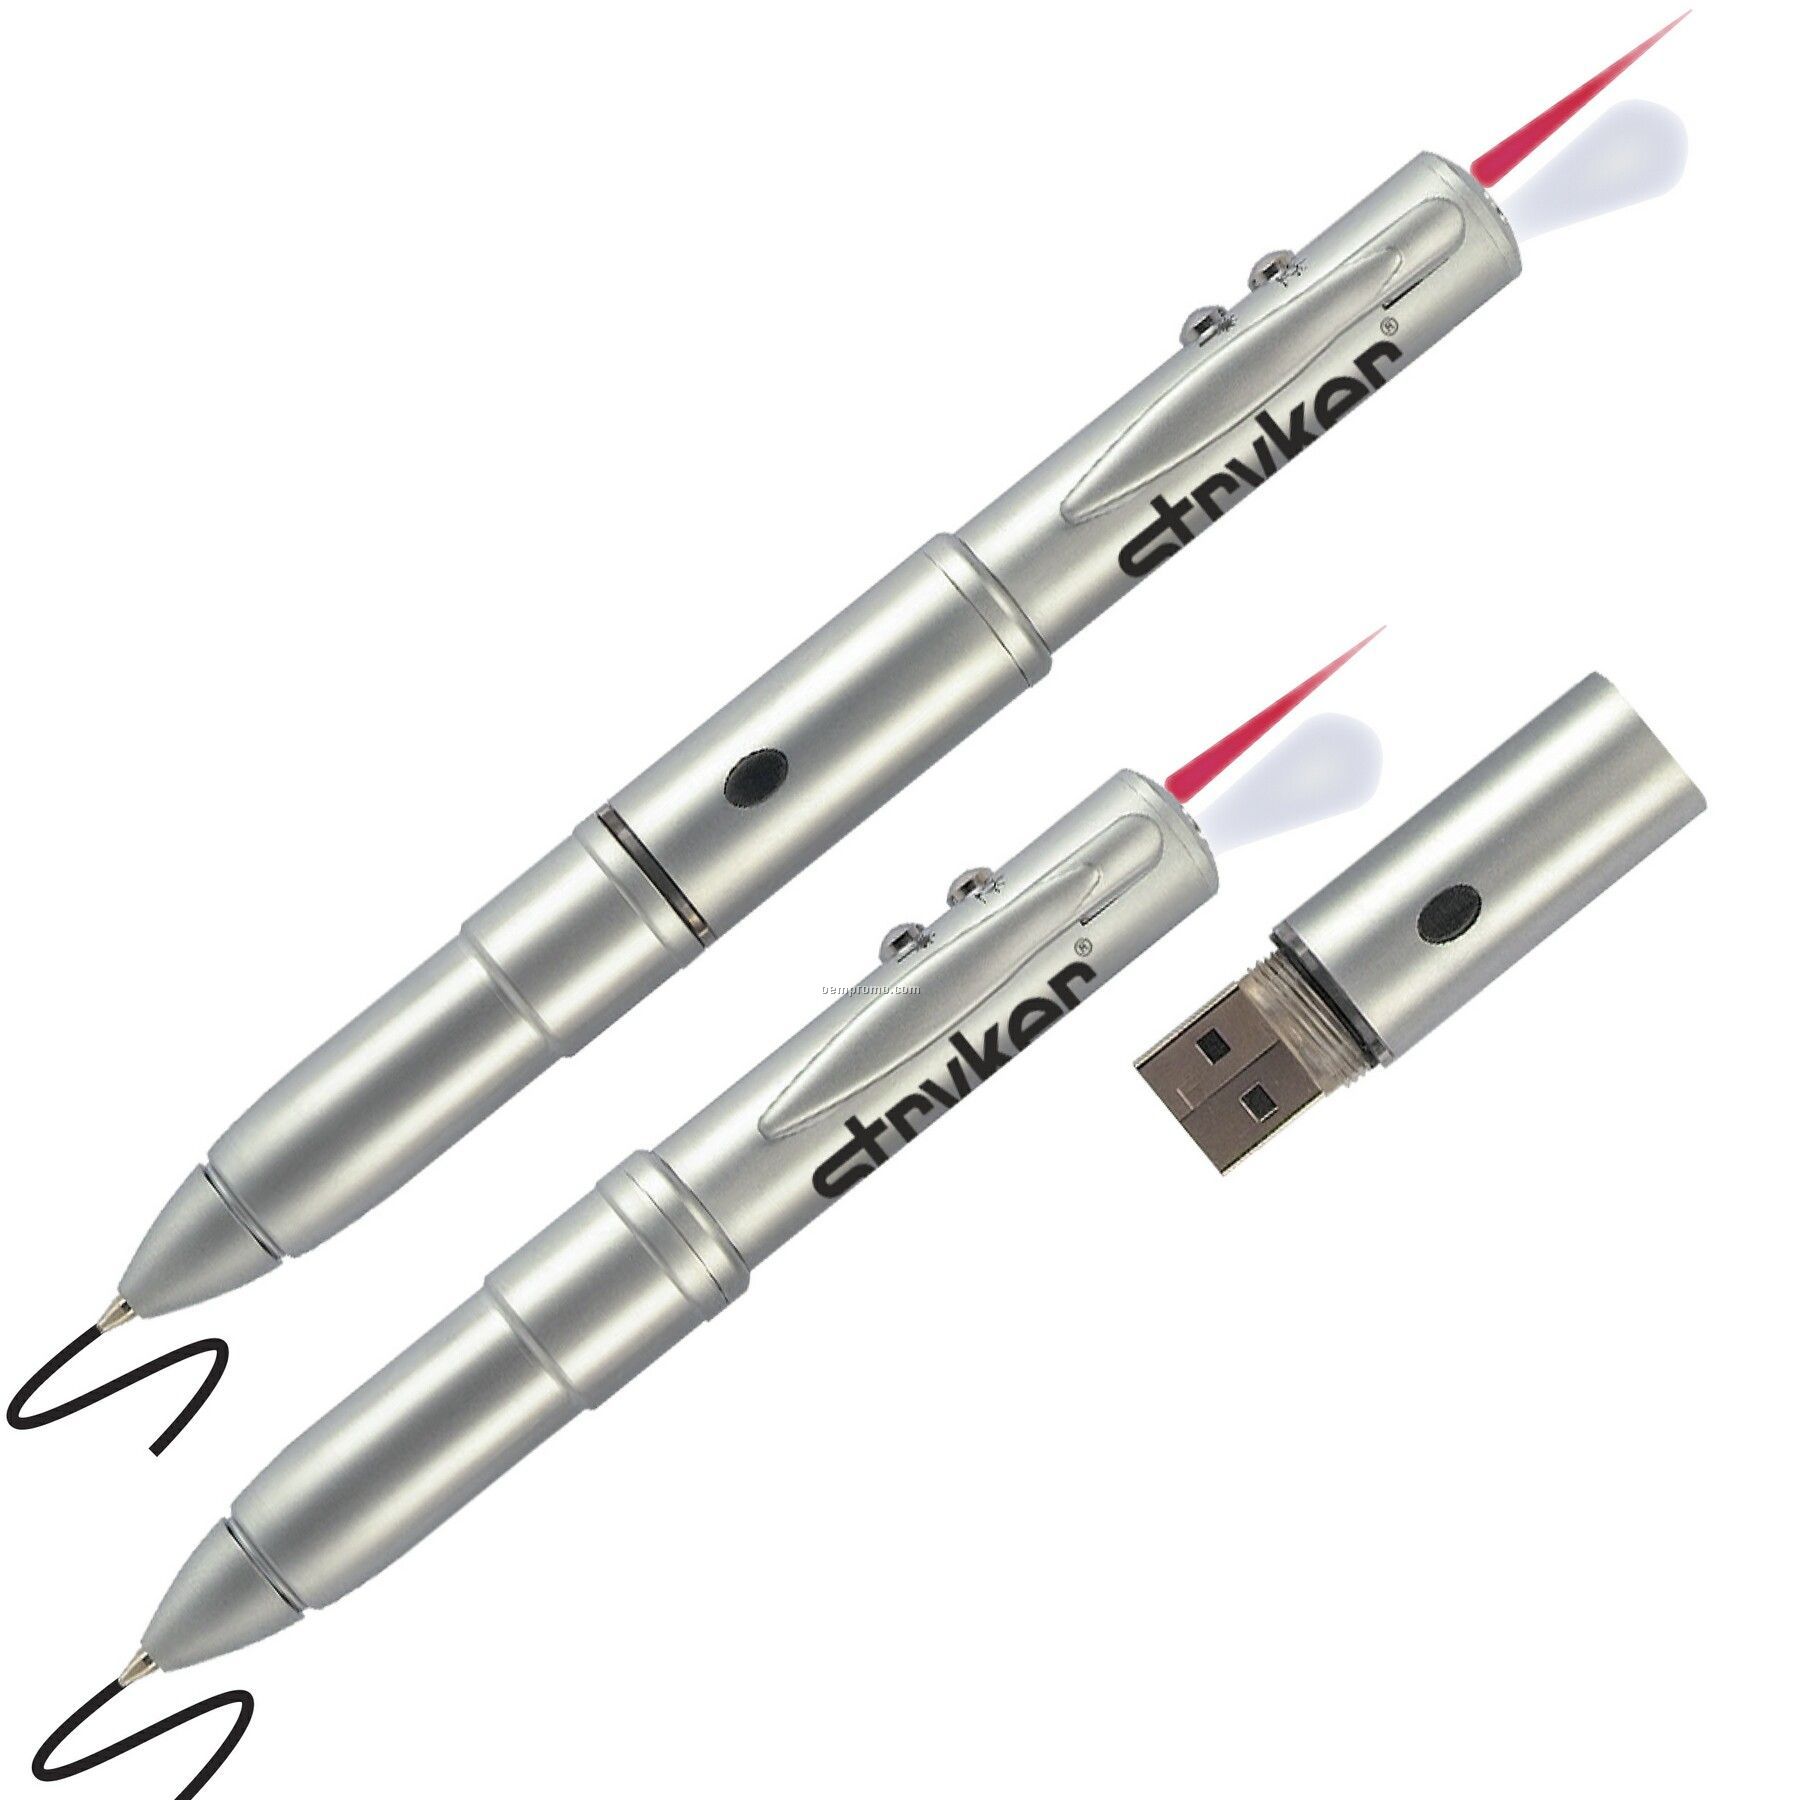 Alpec Comet USB Laser Pointer Pen - 2gb